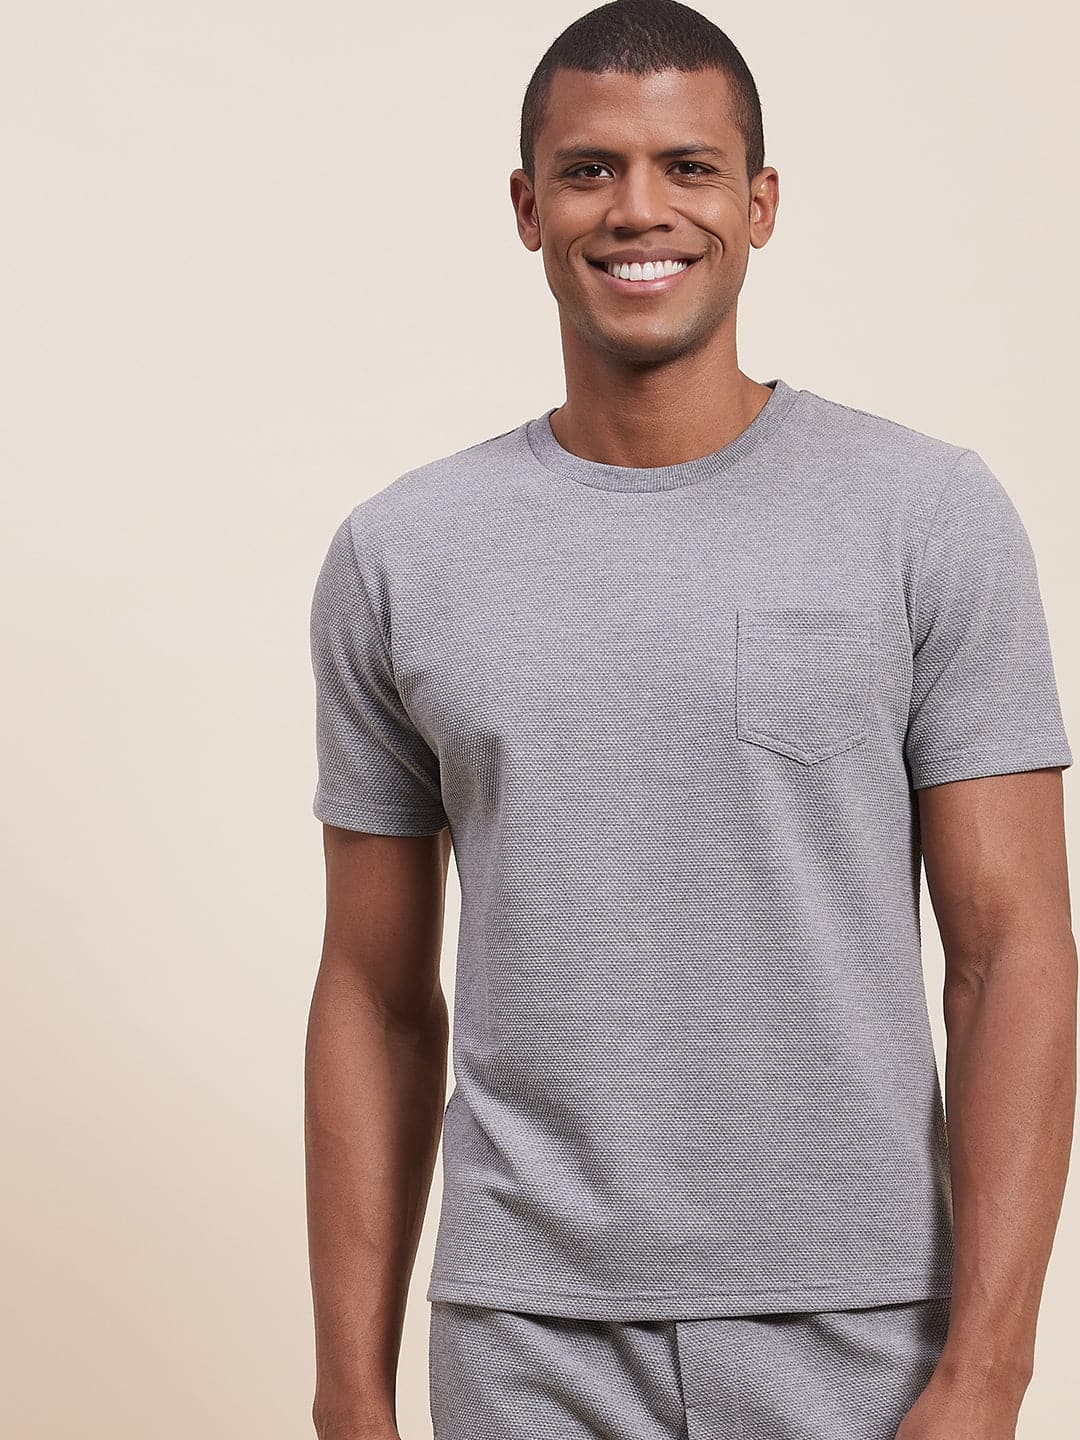 Men's Grey Melange Slim Fit Pocket T-Shirt - LYUSH-MASCLN